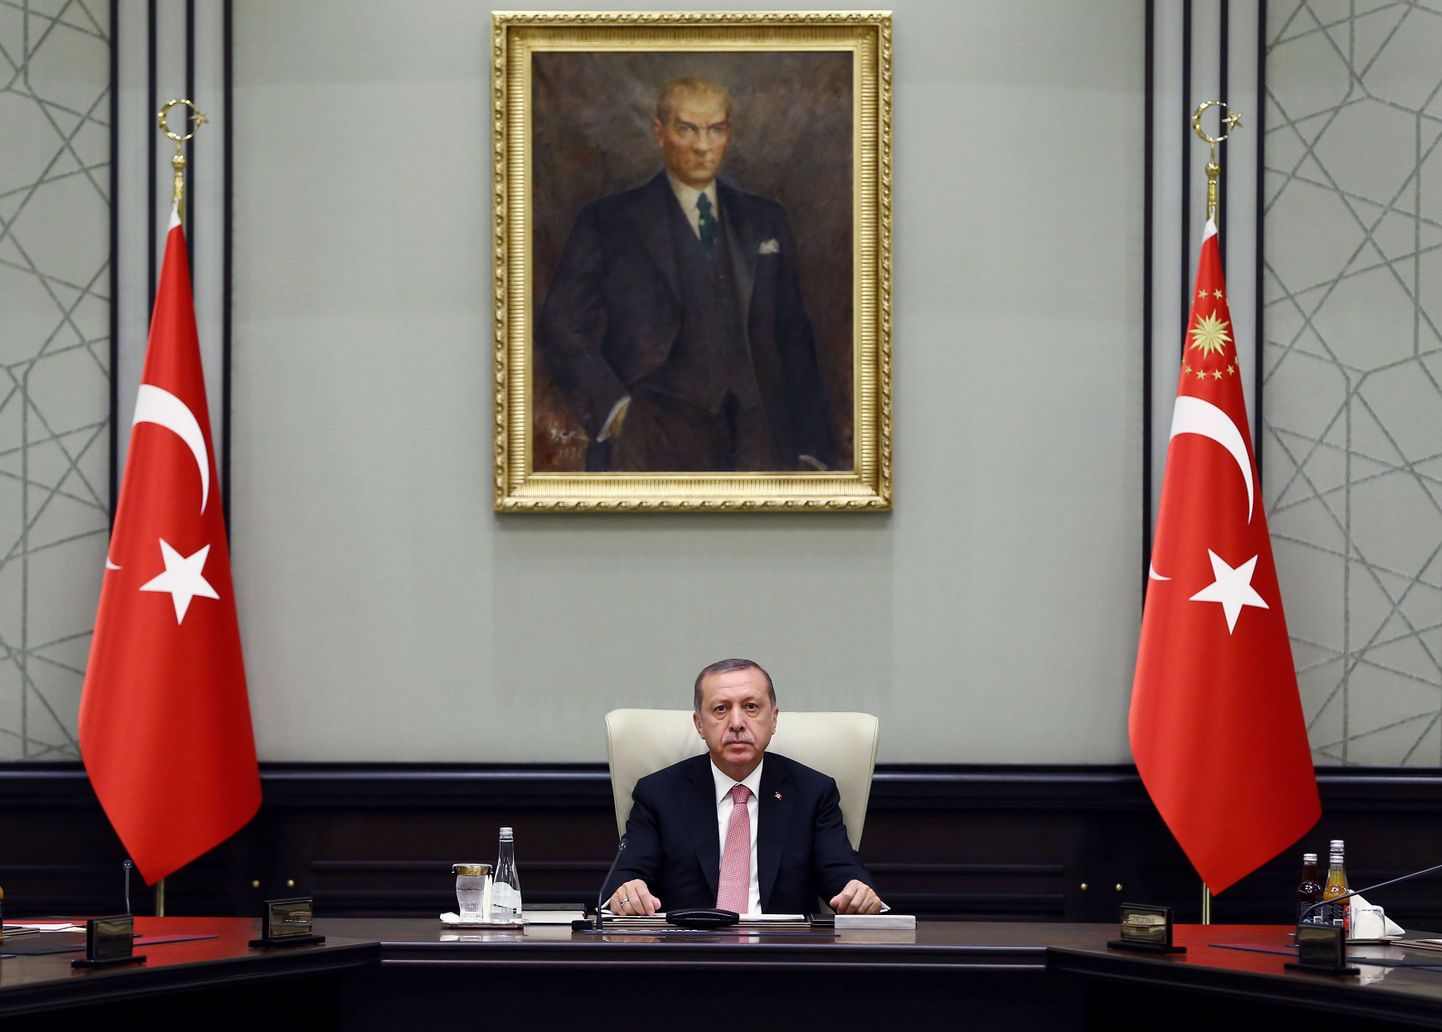 Türgi president Tayyip Erdogan